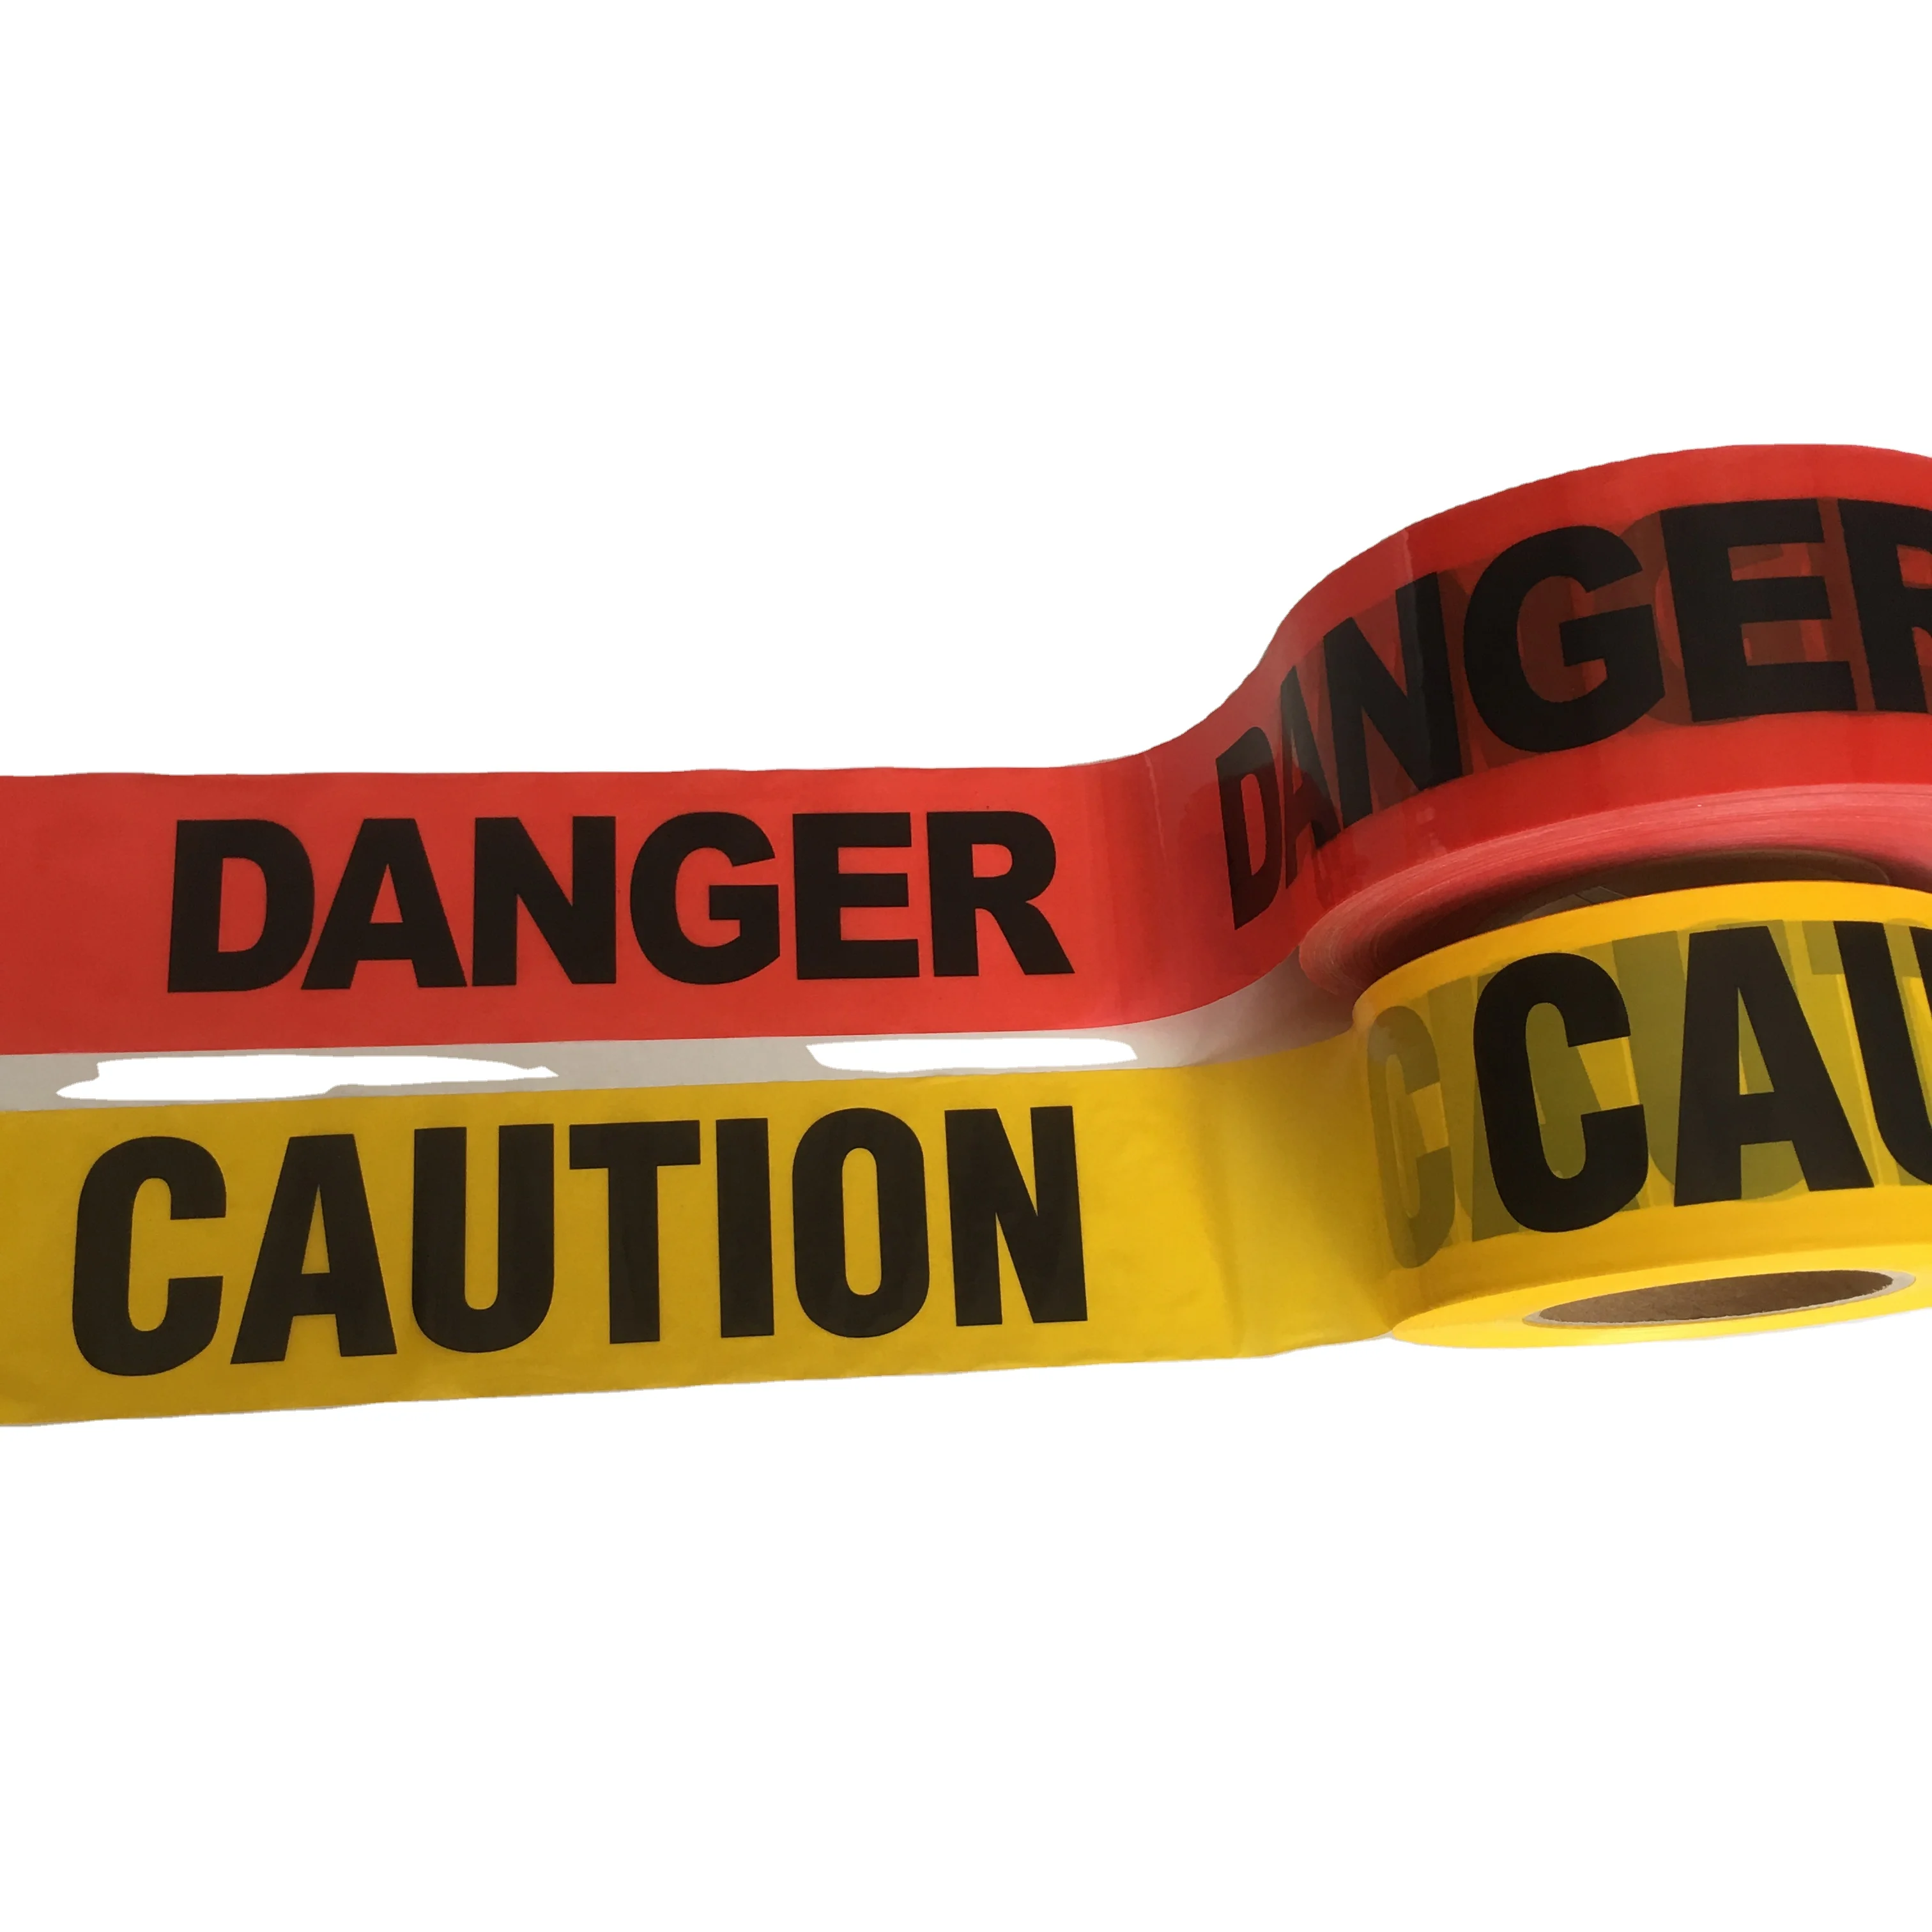 New BARRIER TAPE Safety Cordon Warning Marking Hazard Tape RED WHITE 70mm x 500m 